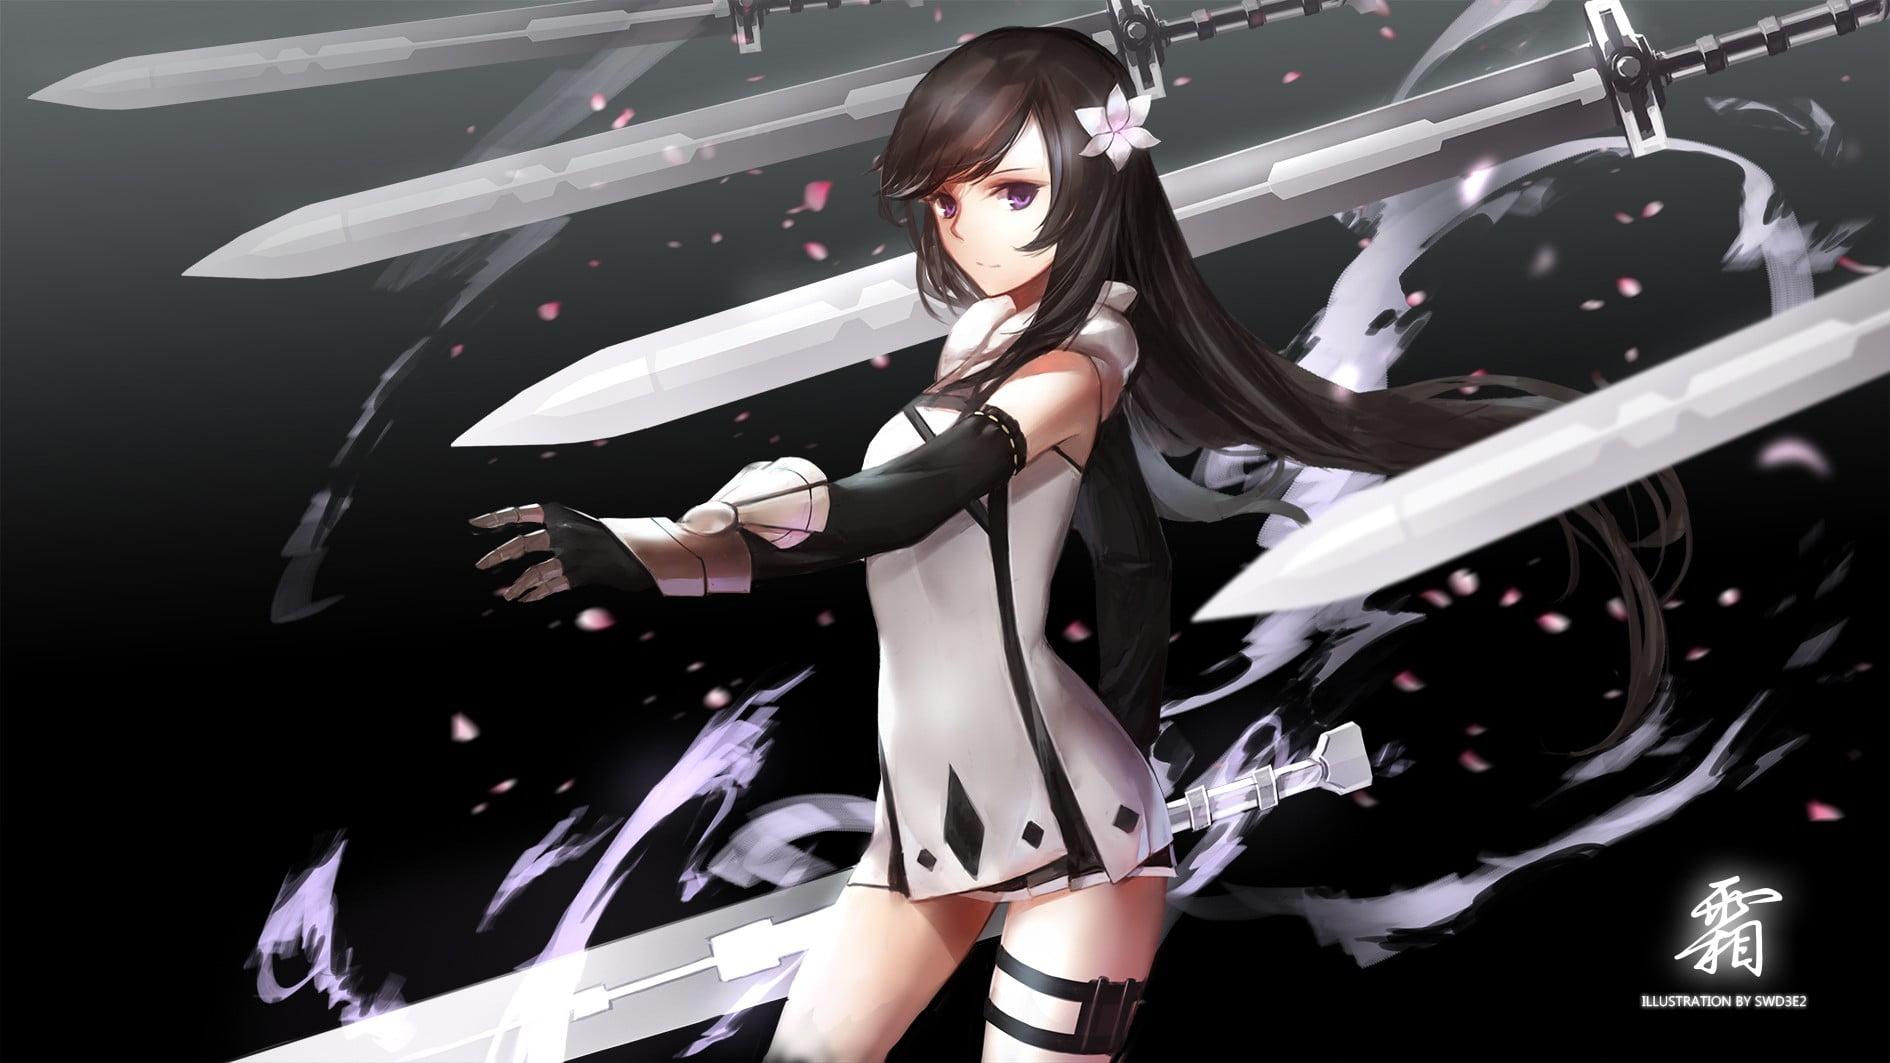 Anime girl character with sword wallpaper HD wallpaper. Wallpaper